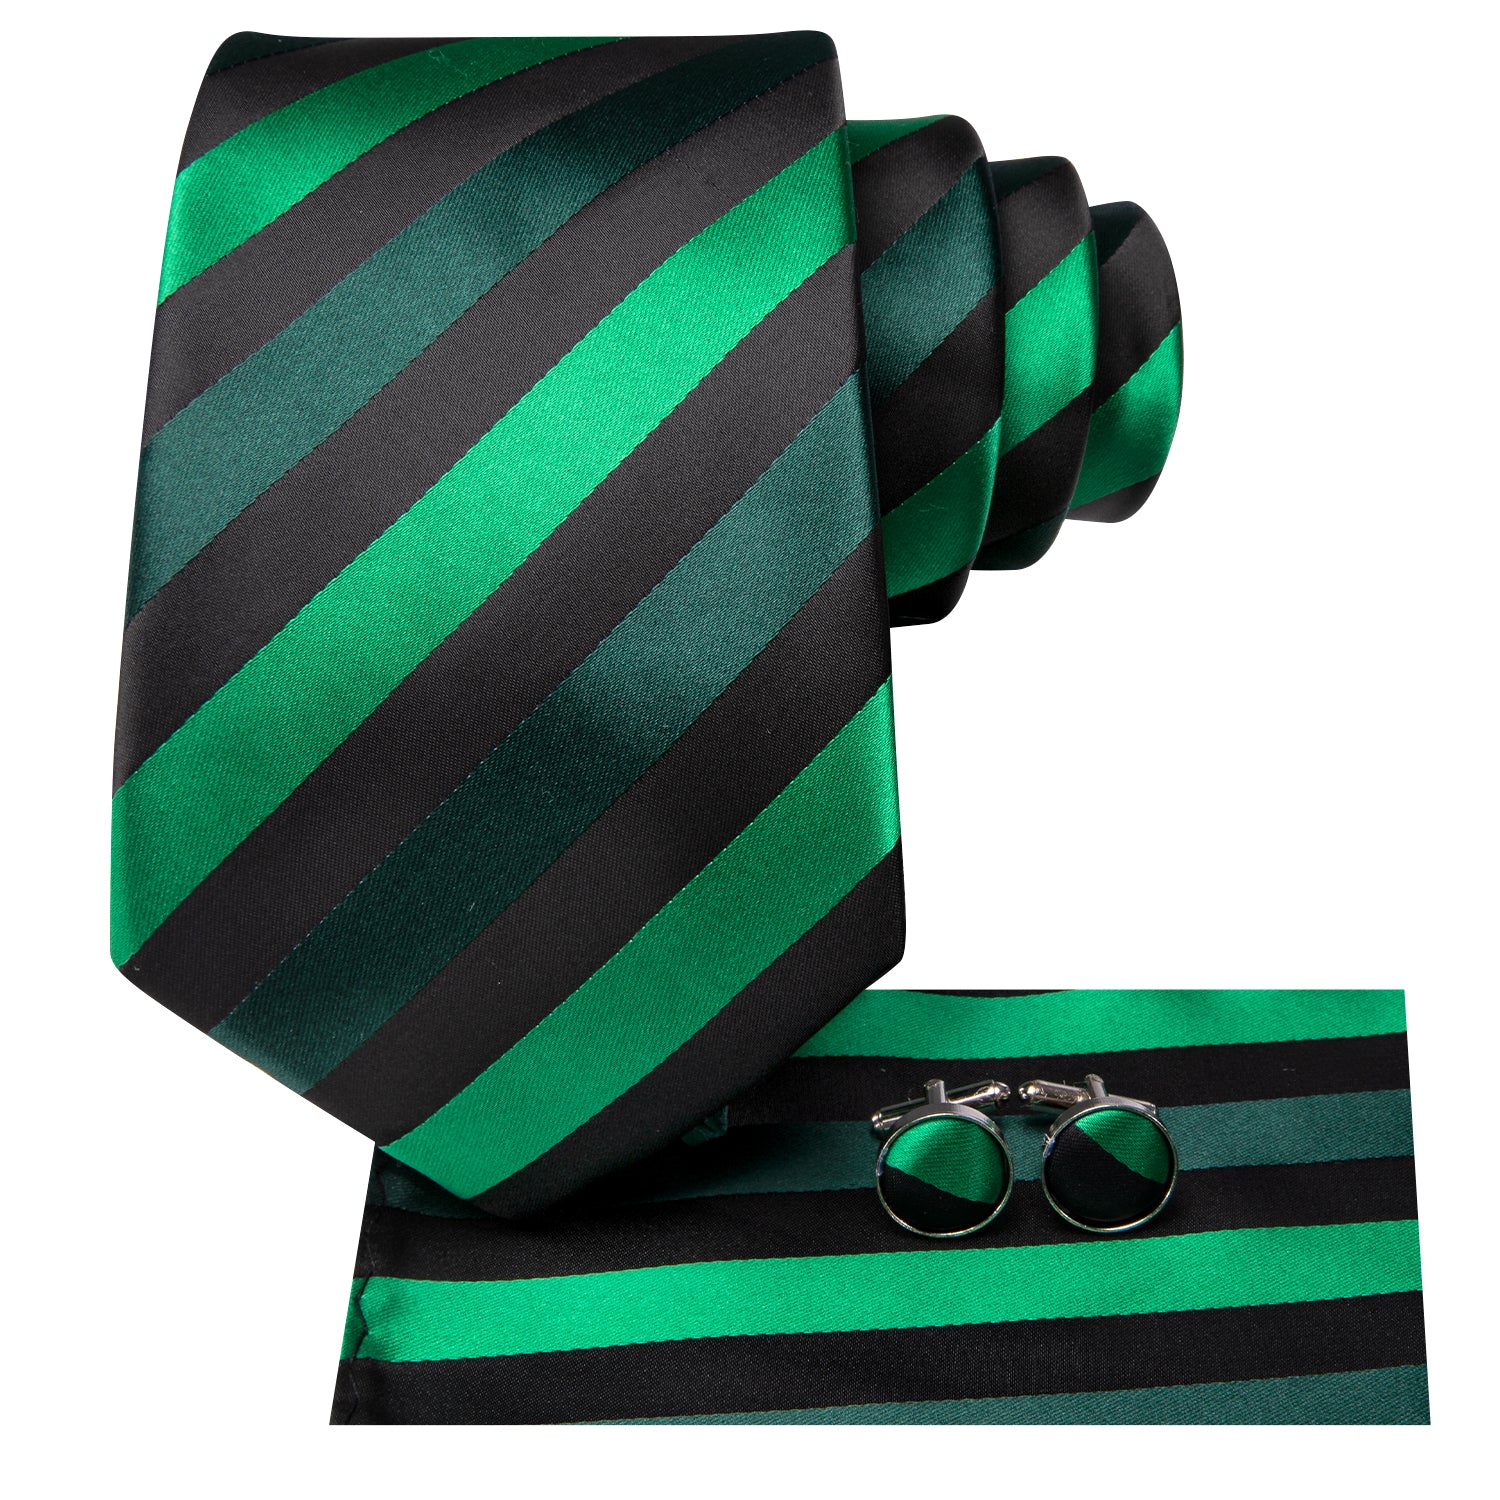 Hi-Tie Bright Green Striped Men's Tie Pocket Square Cufflinks Set